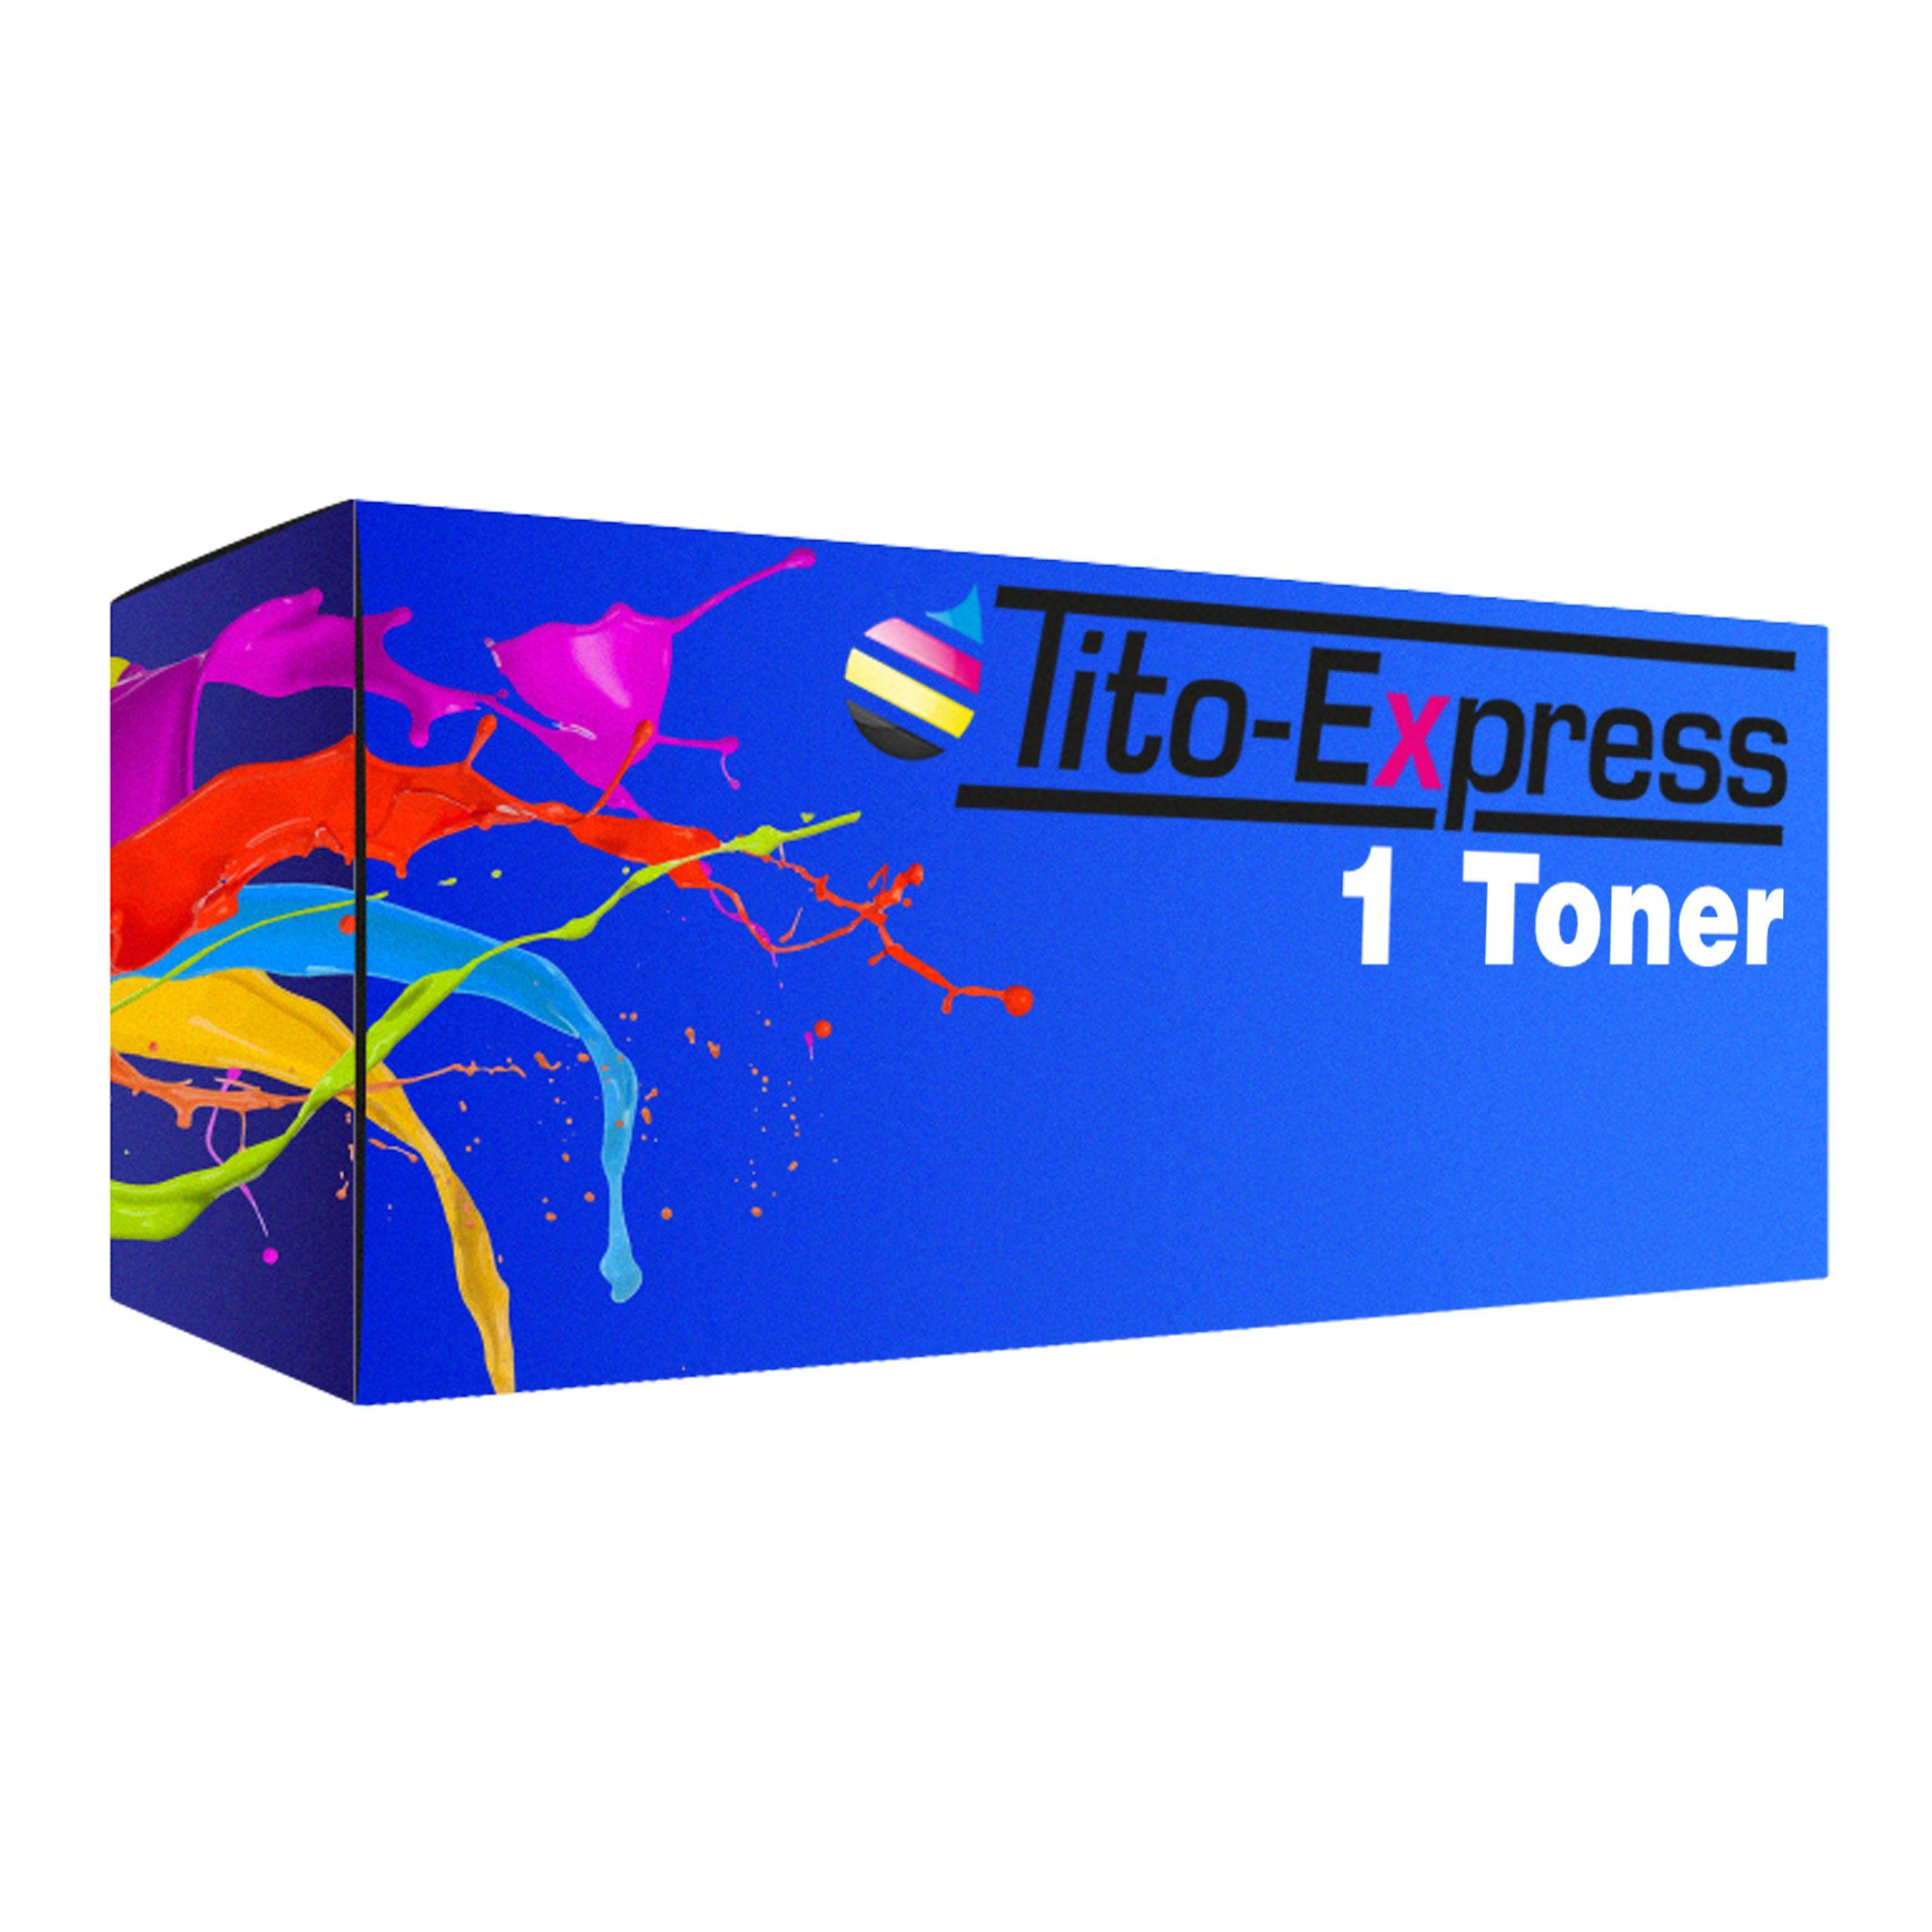 Tito-Express Tonerpatrone ersetzt Brother TN-3060 TN3060, (1x Black), für HL-5130 HL-5140 HL-5100 Series DCP-8040 DCP-8045 MFC-8240 MFC-8440